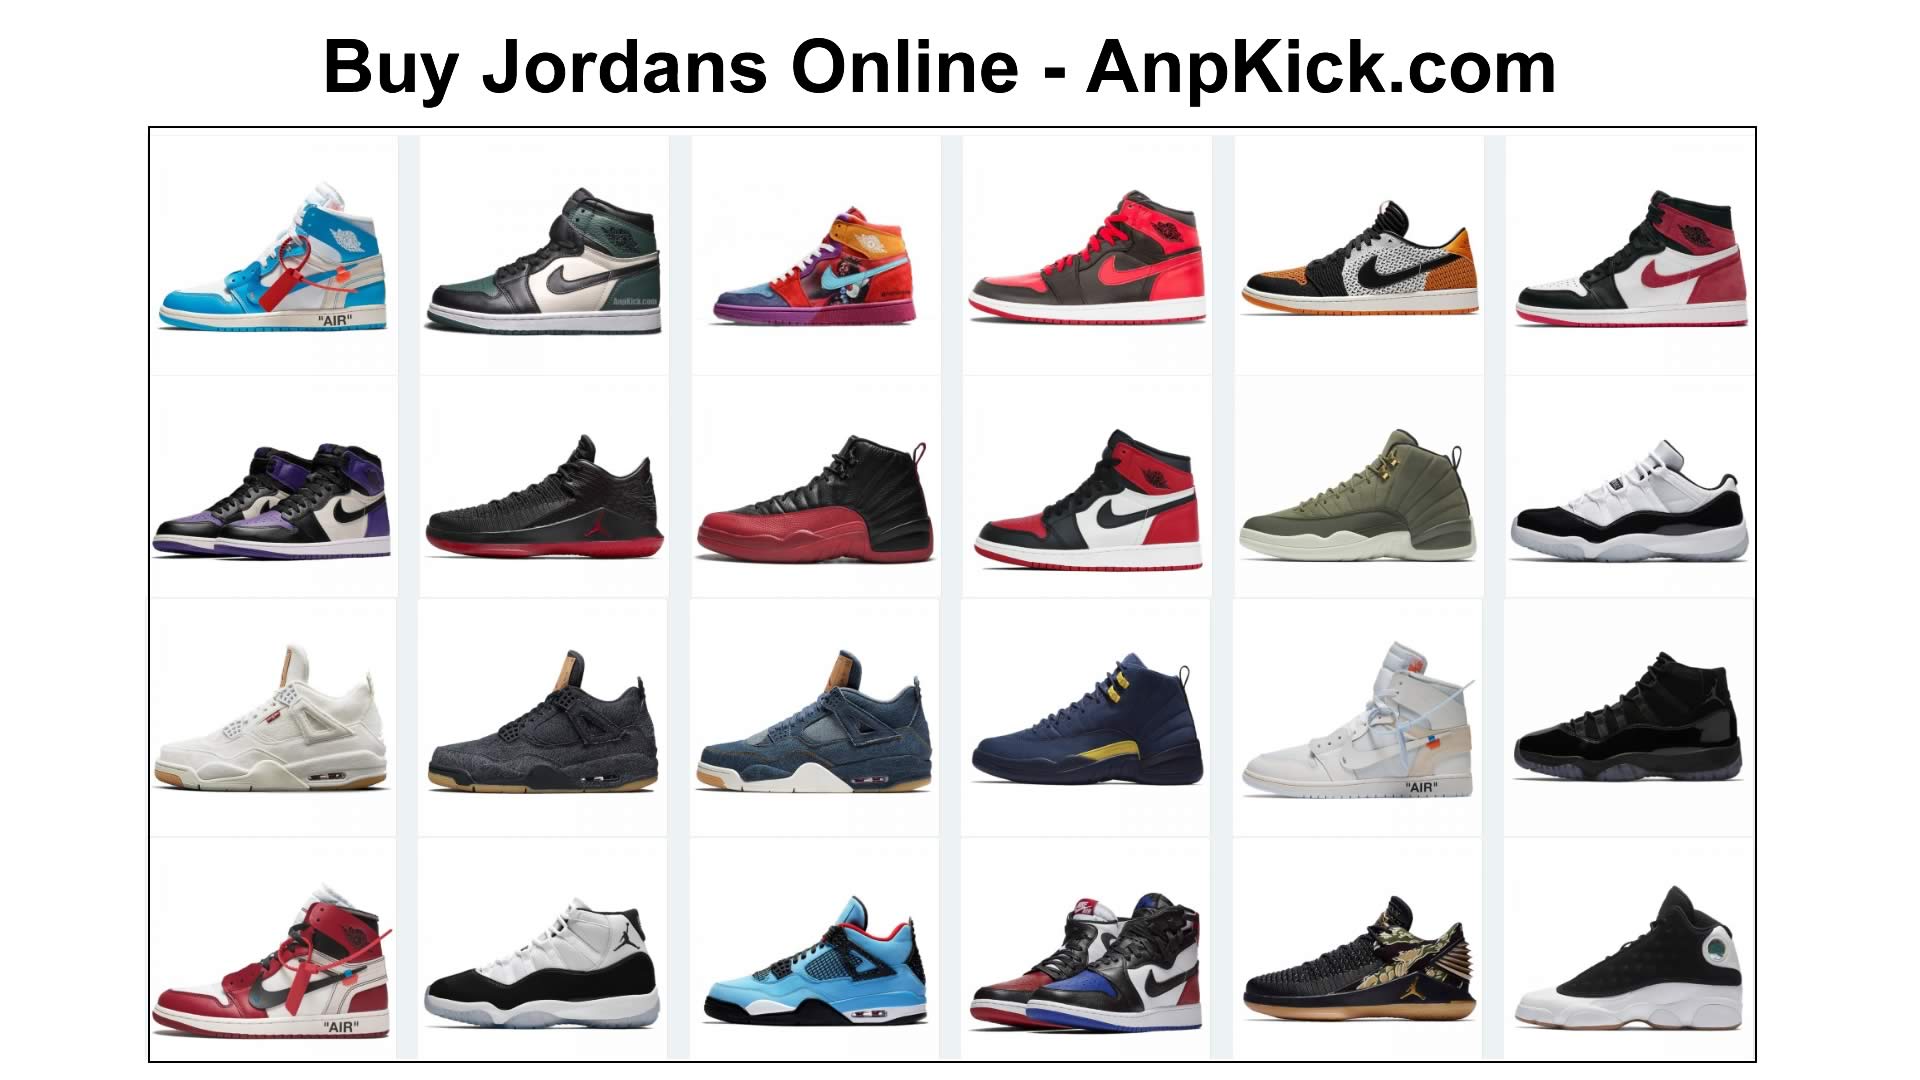 where can i order jordans online